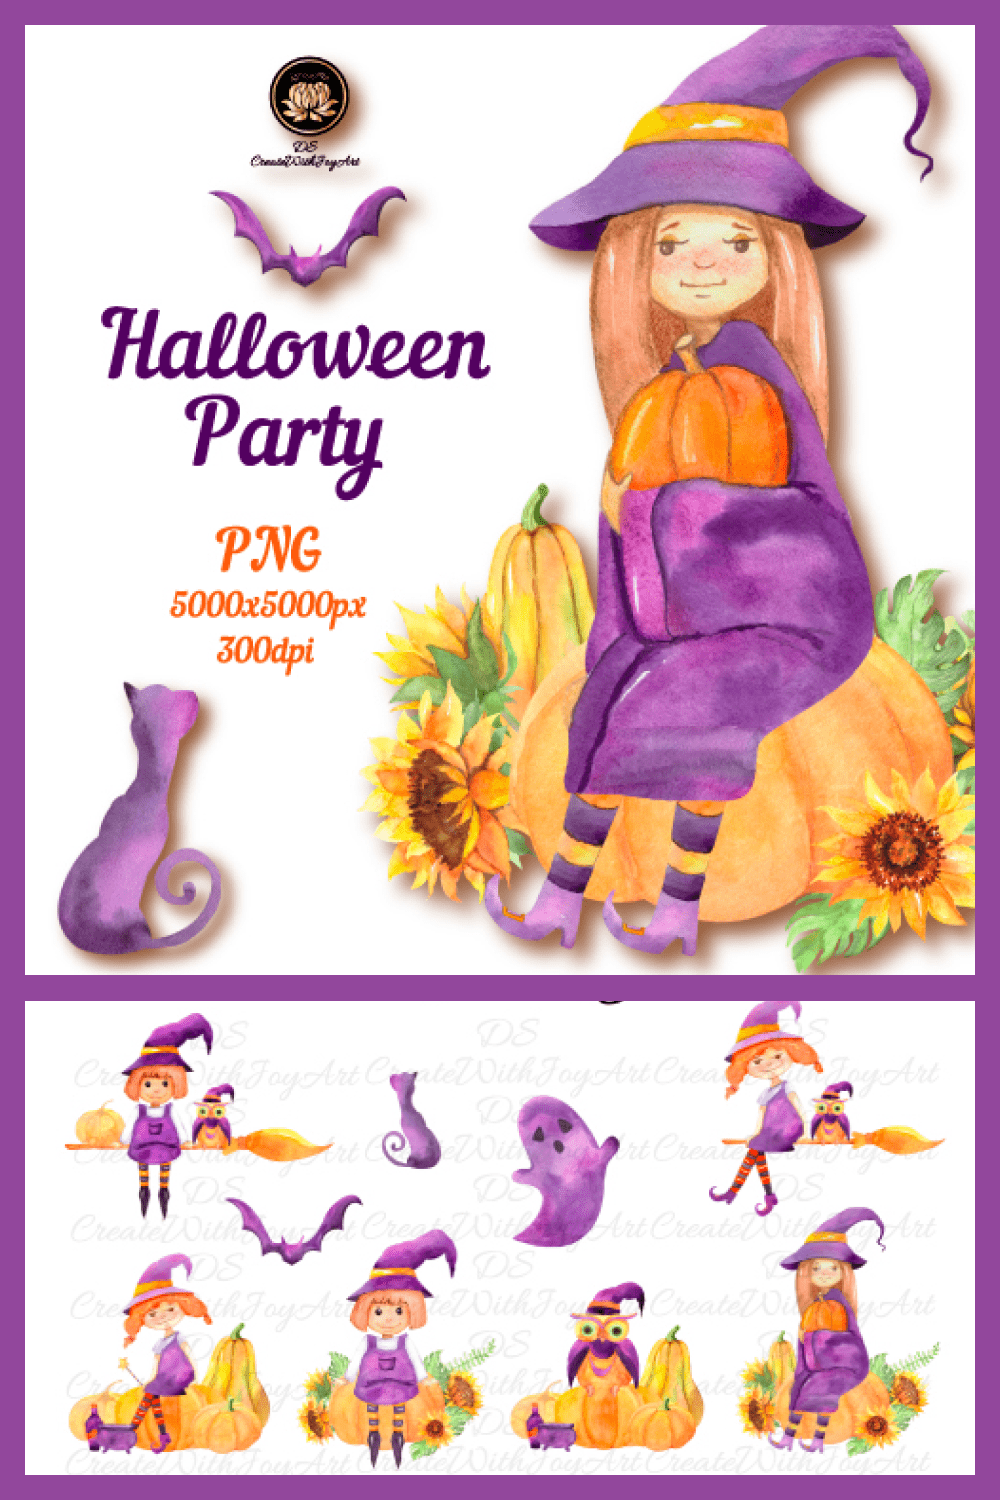 Halloween Party. Funny Witch Set - MasterBundles - Pinterest Collage Image.